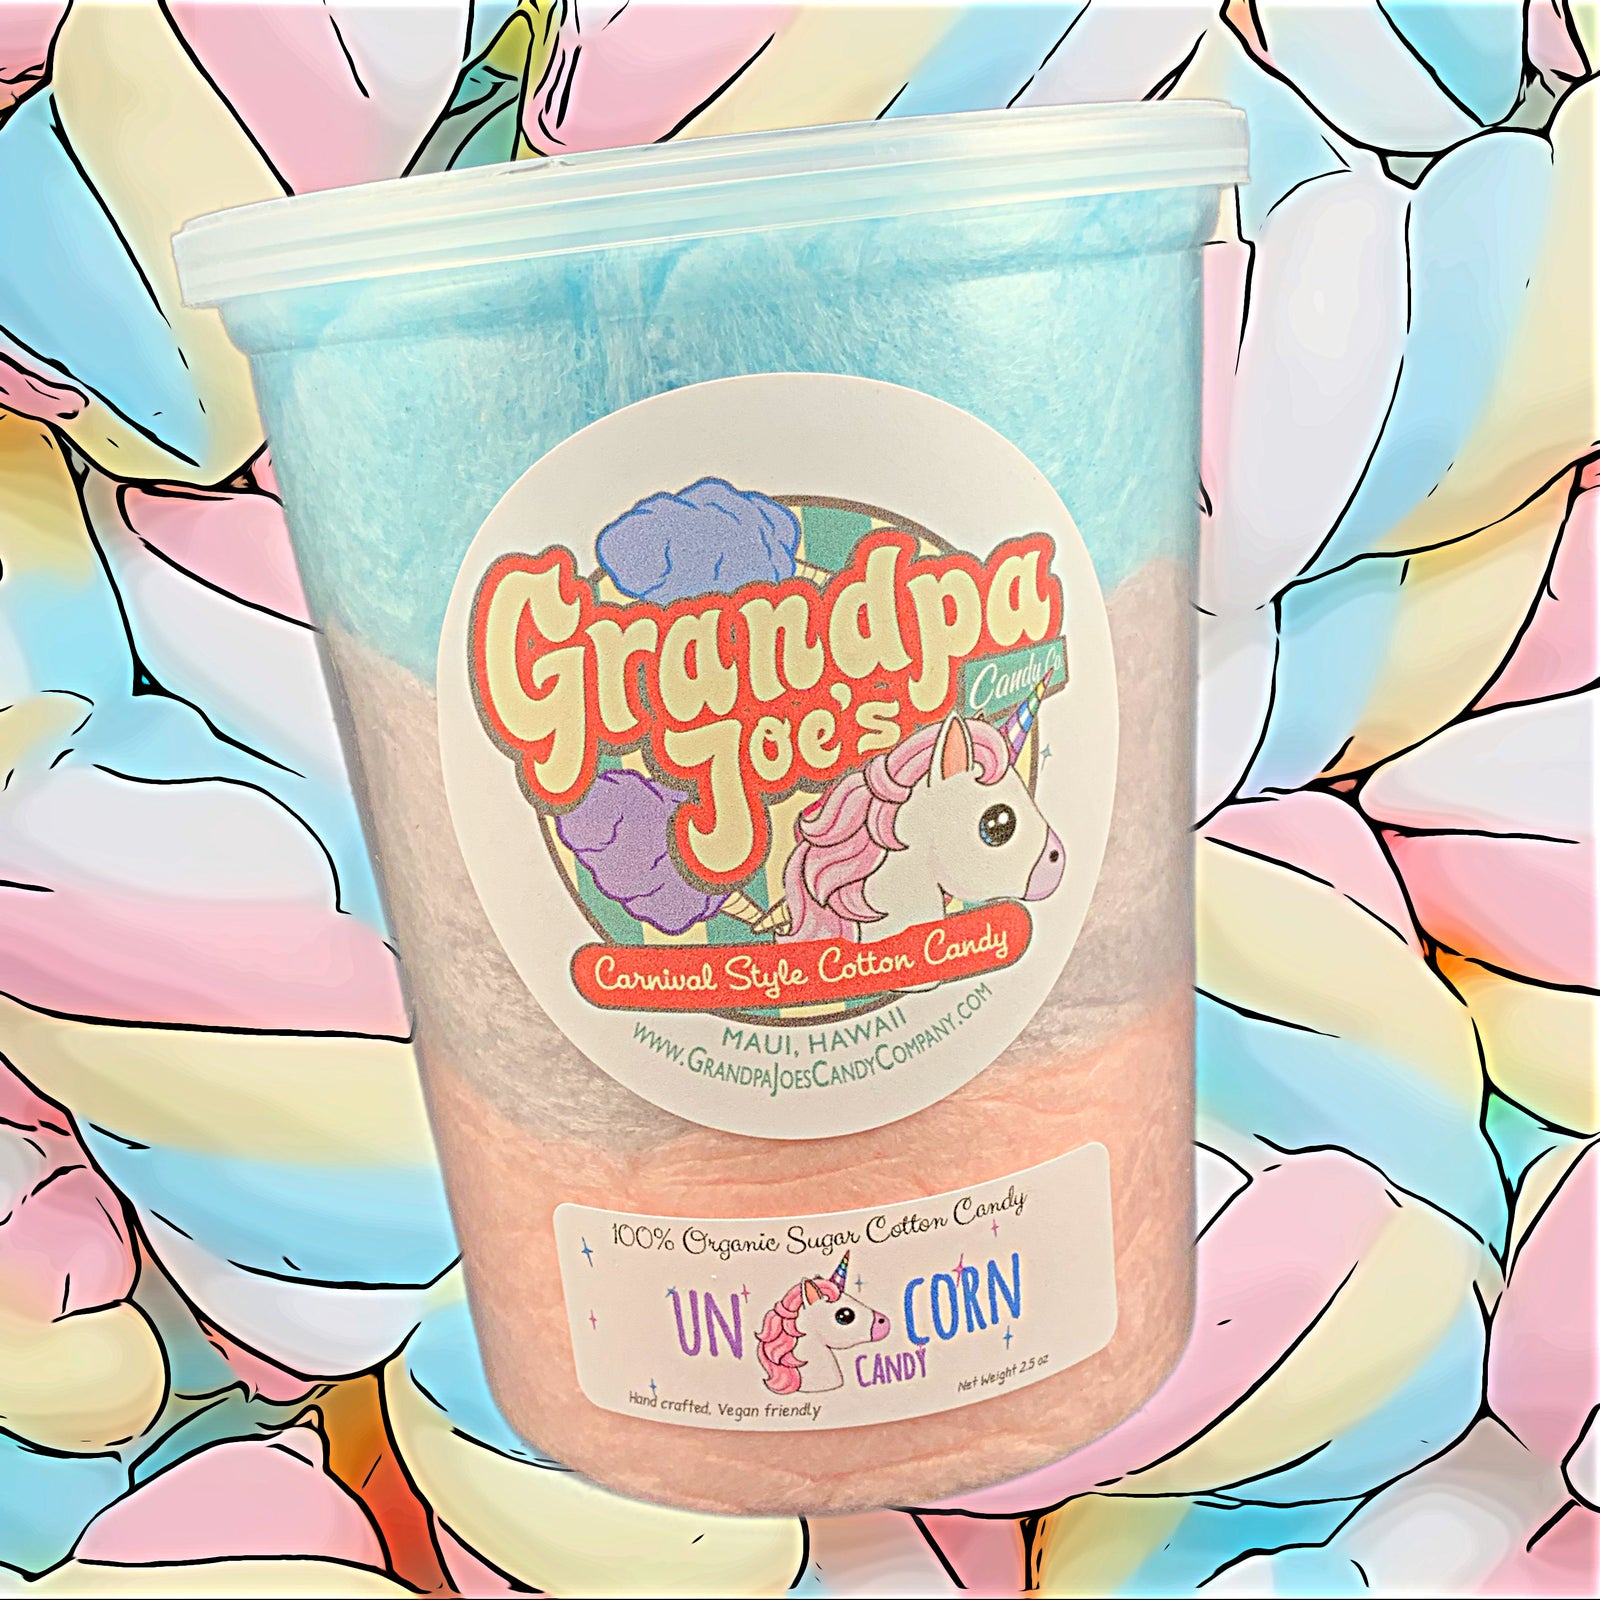 Pop-Up Mākeke - Grandpa Joe's Candy Company - Unicorn Candy 100% Organic Sugar Cotton Candy